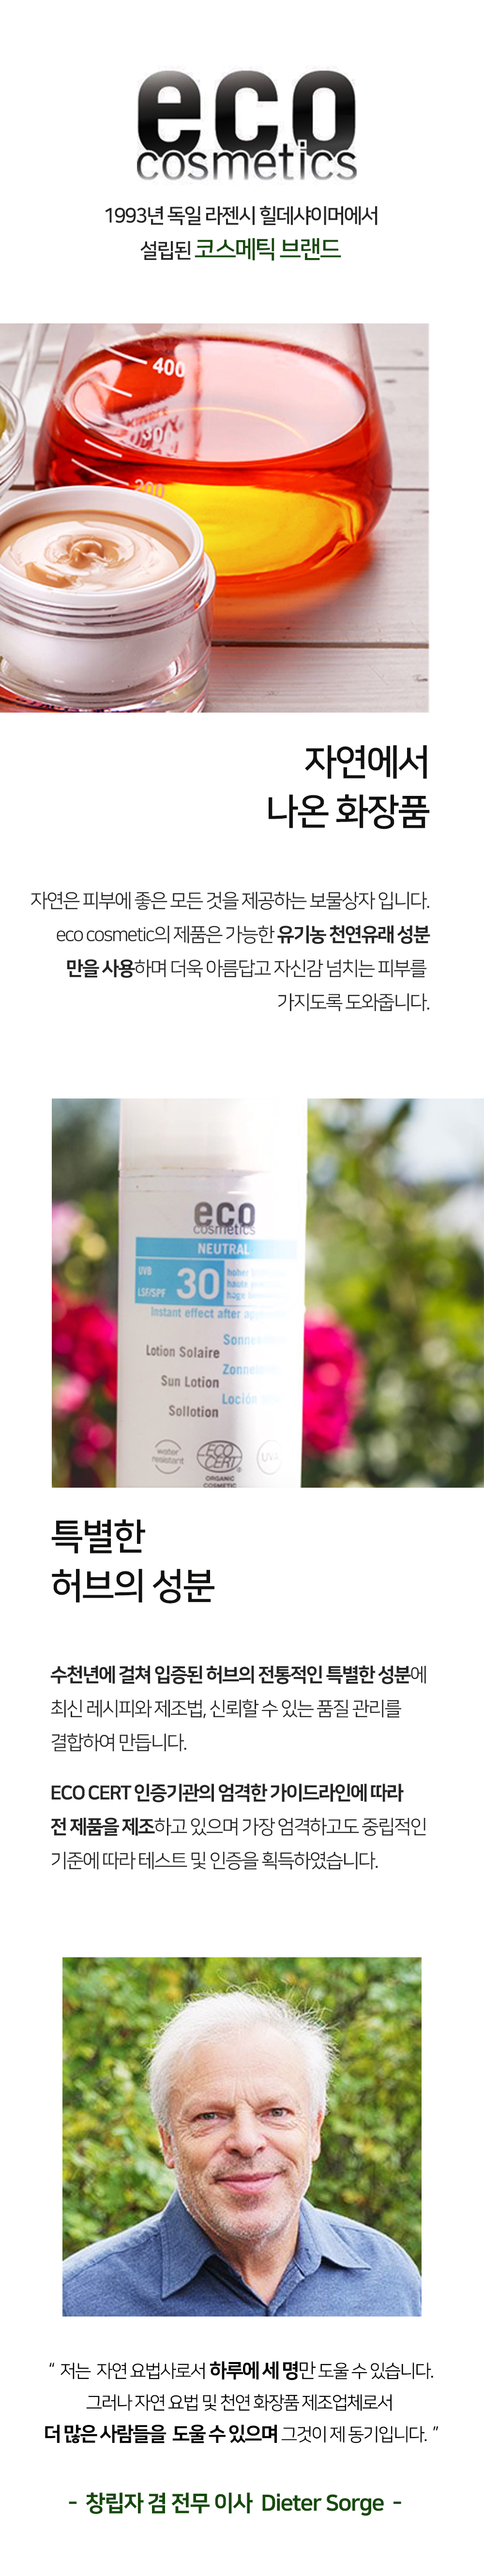 Eco-cosmetics-brand-mobile-fix_144814.jpg